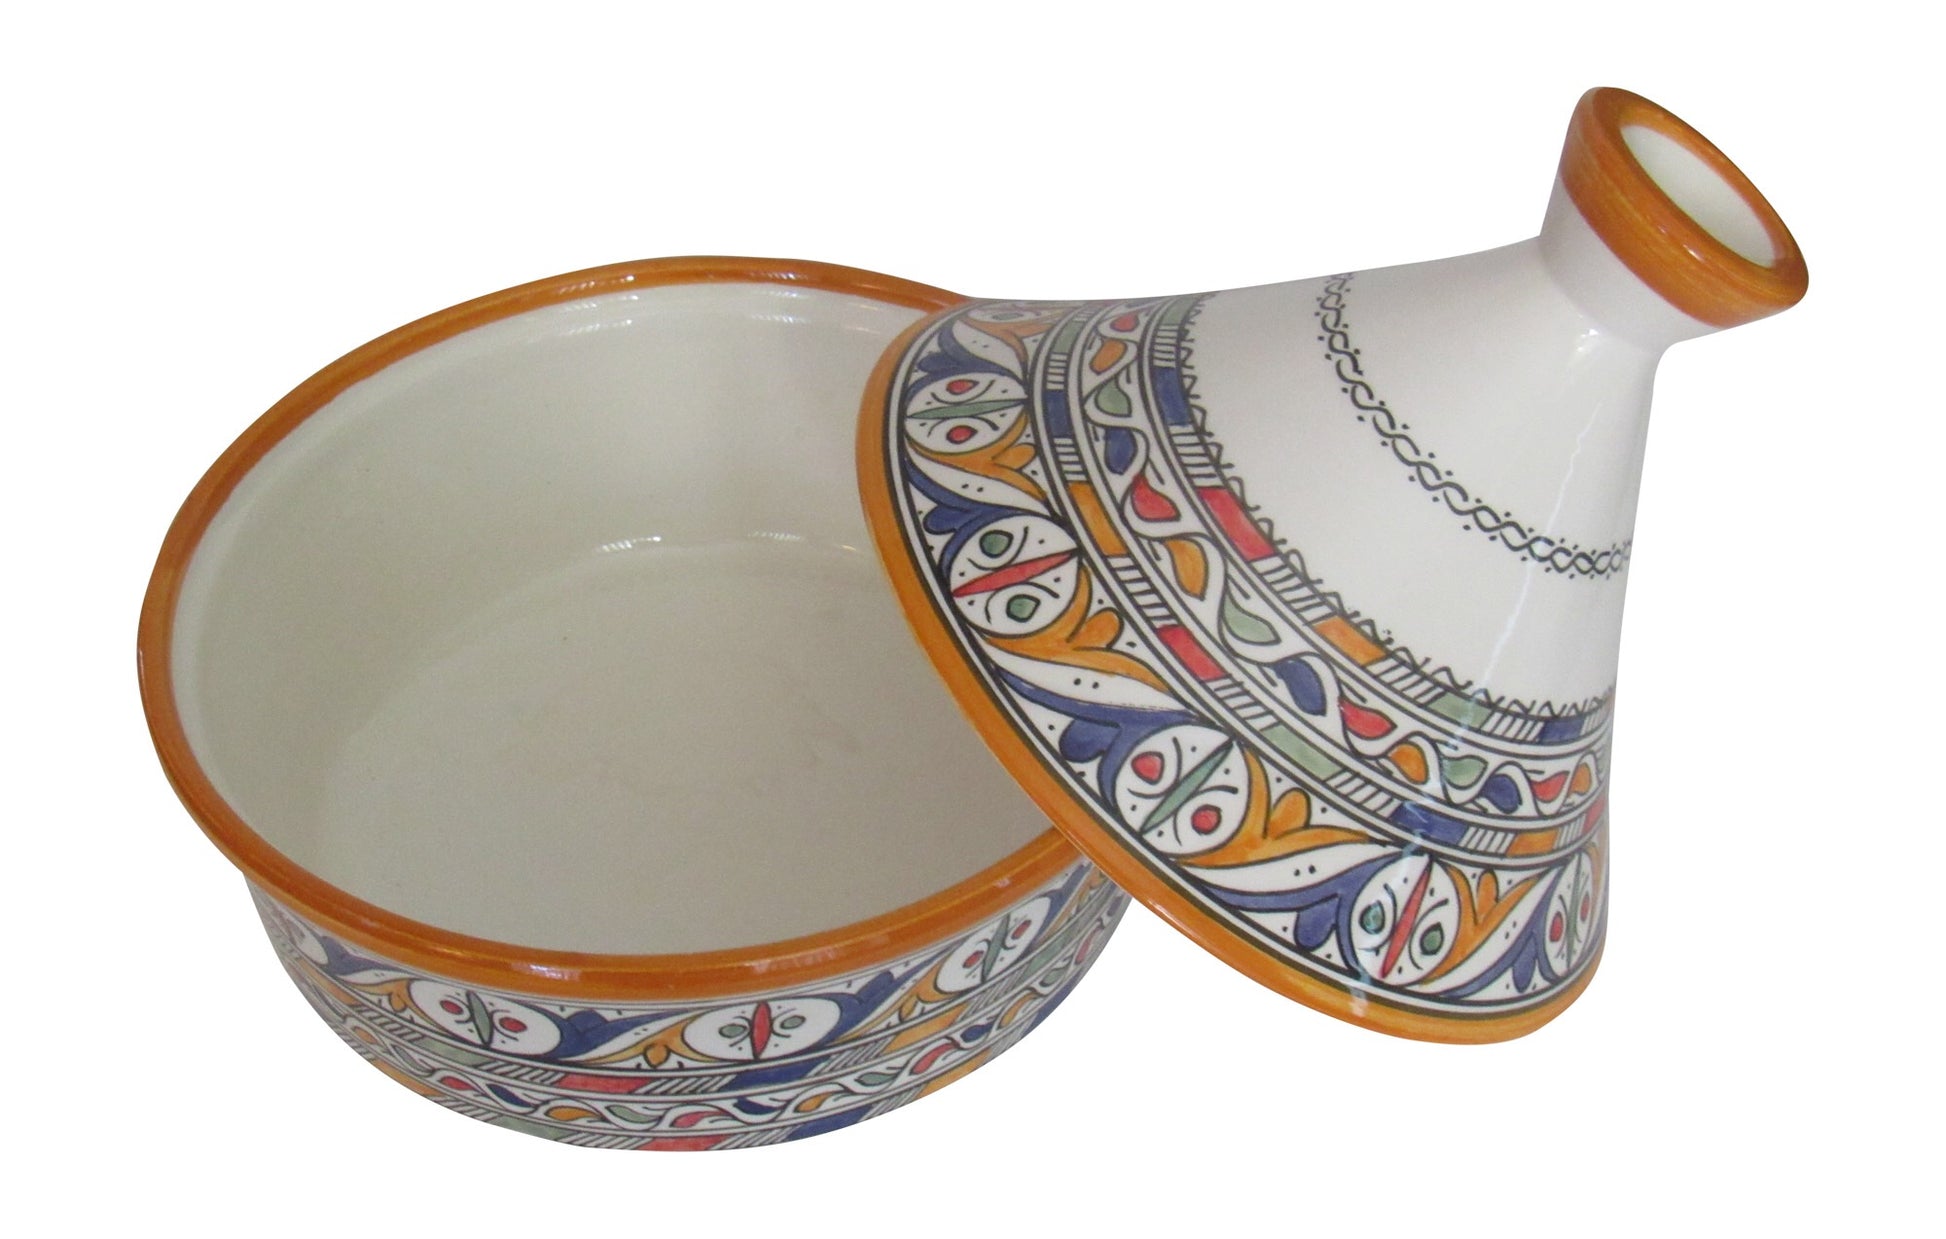 Handmade Authentic Moroccan Moorish Style Ceramic Serving Tagine, Extra Large 12" D x 12 1/2"H - Marrakesh Gardens